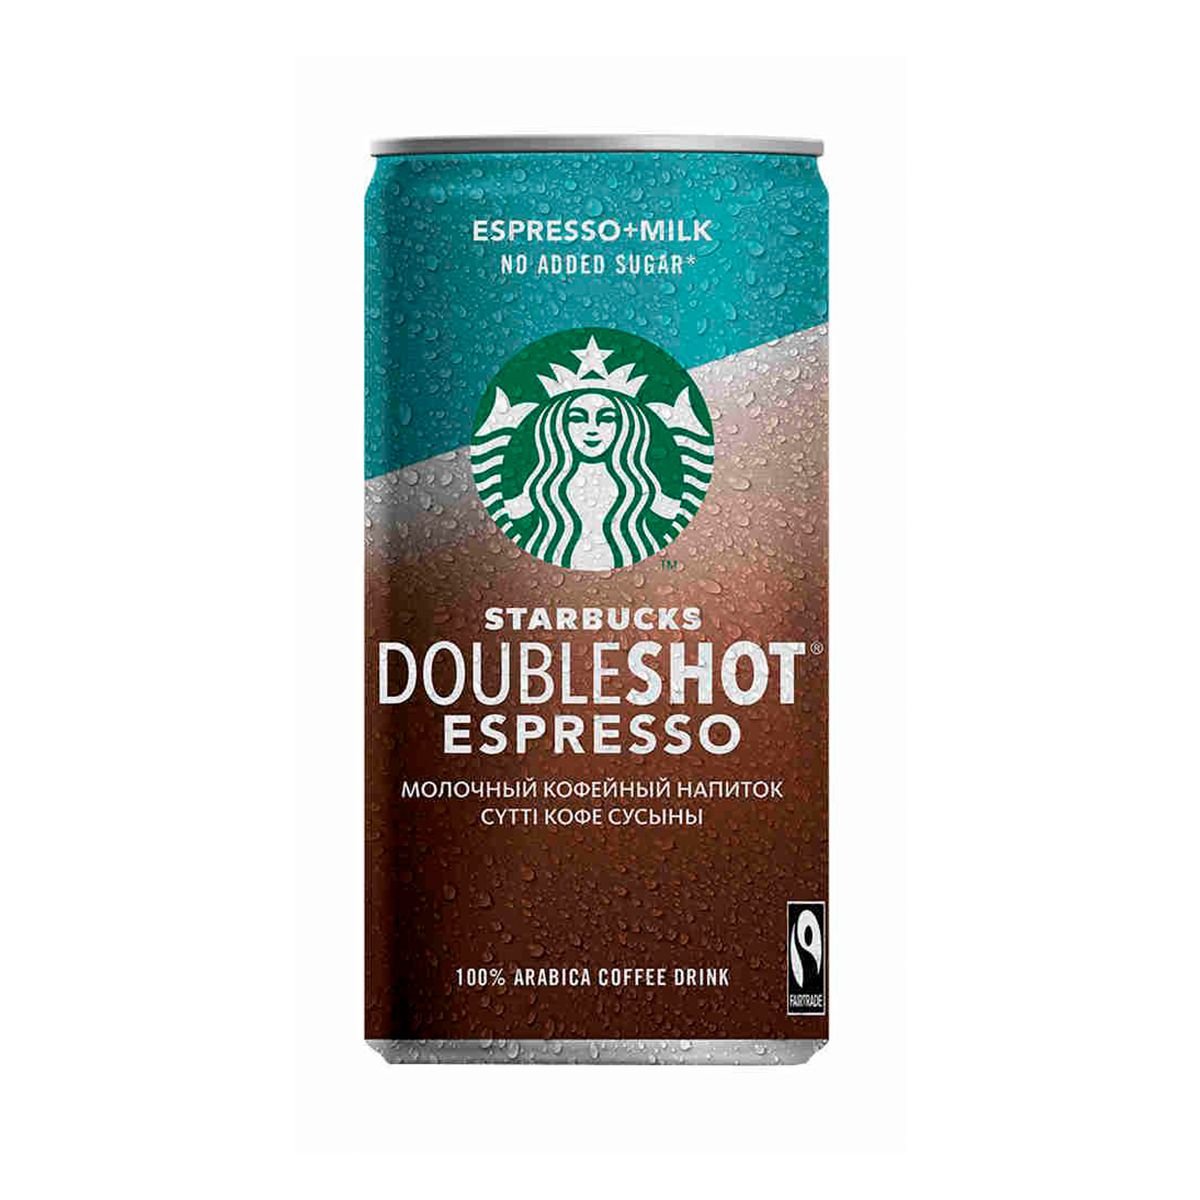 2 эспрессо. Старбакс молочный кофейный напиток. Starbucks Doubleshot Espresso. Starbucks Doubleshot. Кофе Starbucks жб.